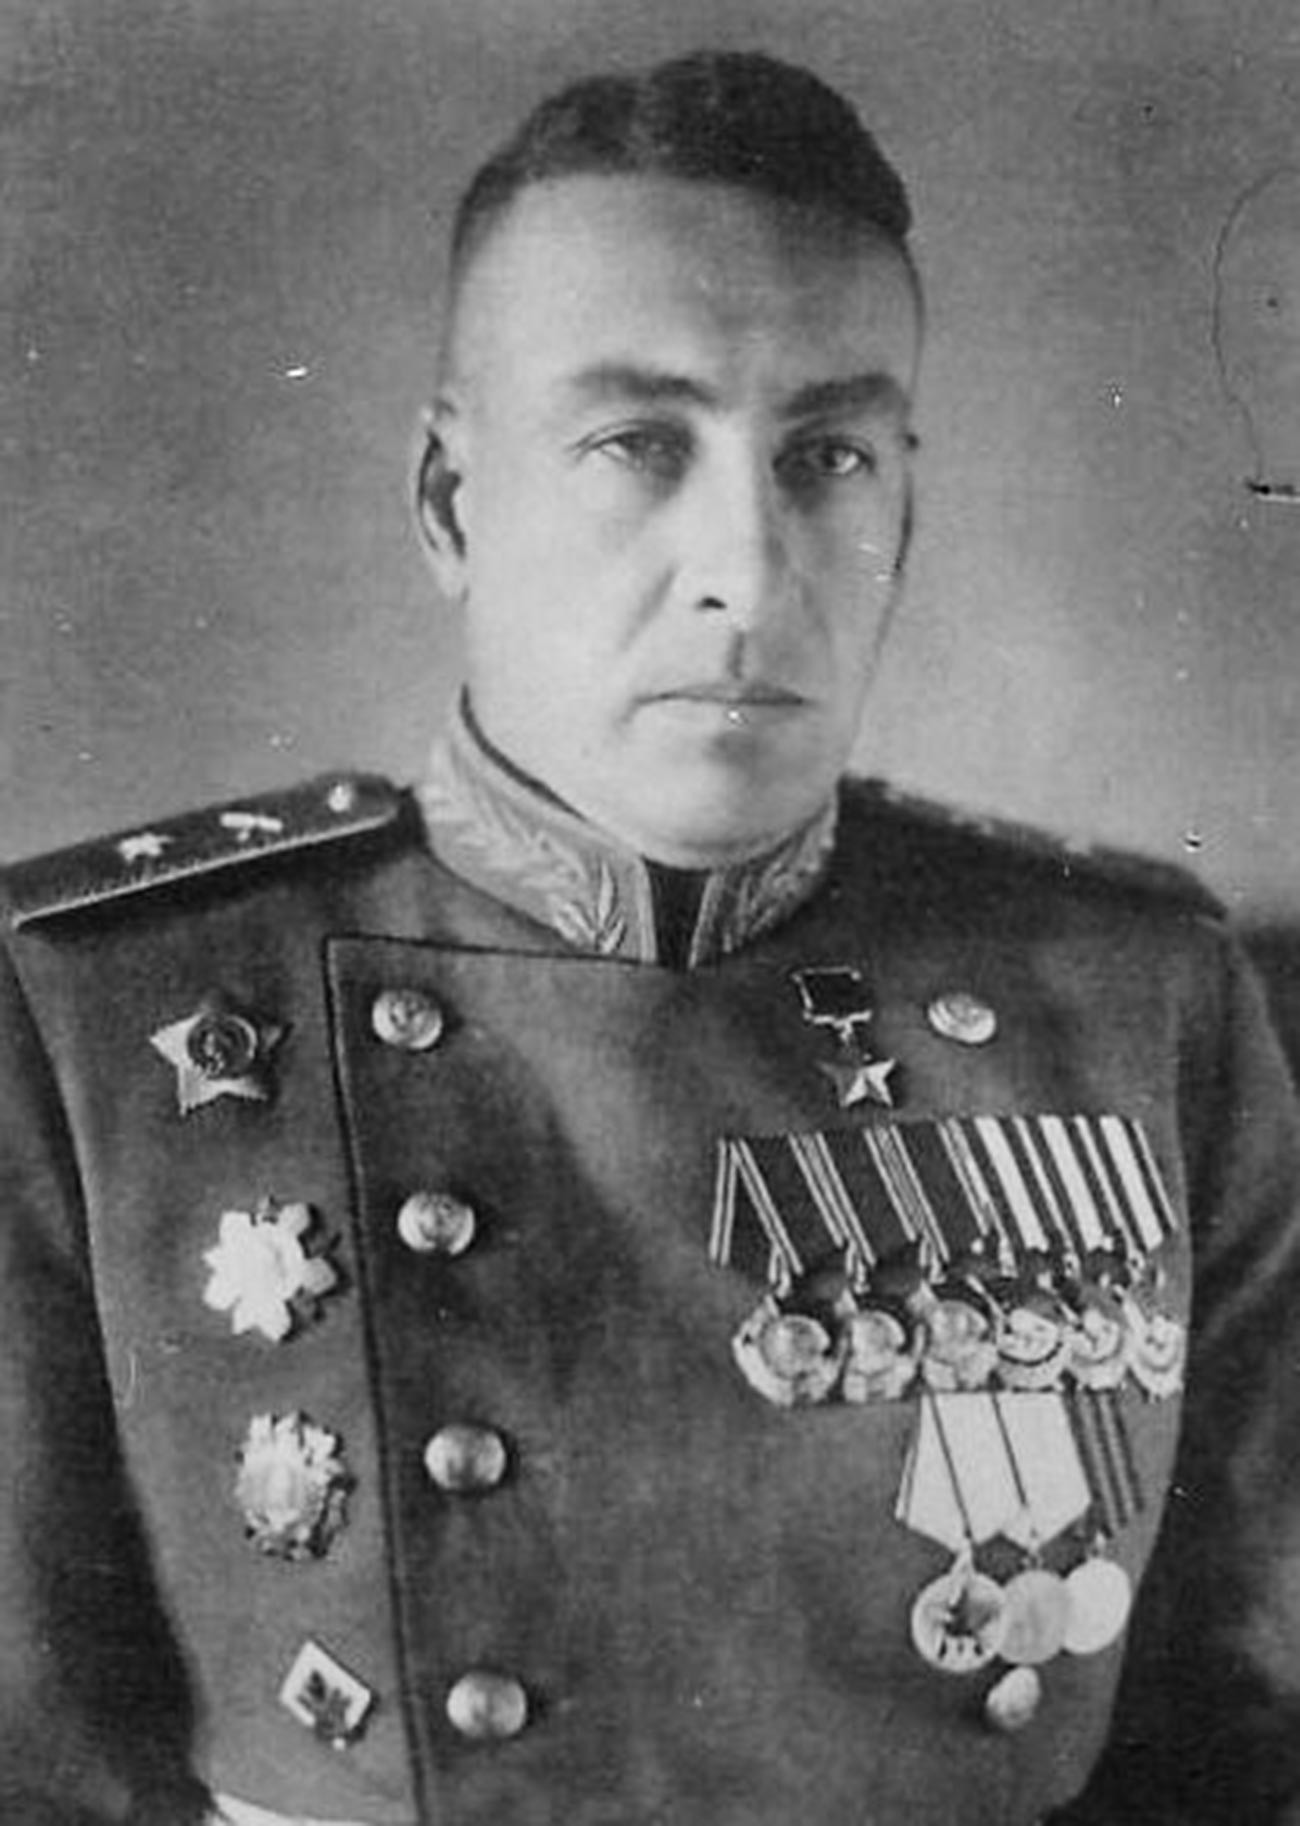 Junak Sovjetske zveze Sergej Sergejevič Volkenštejn